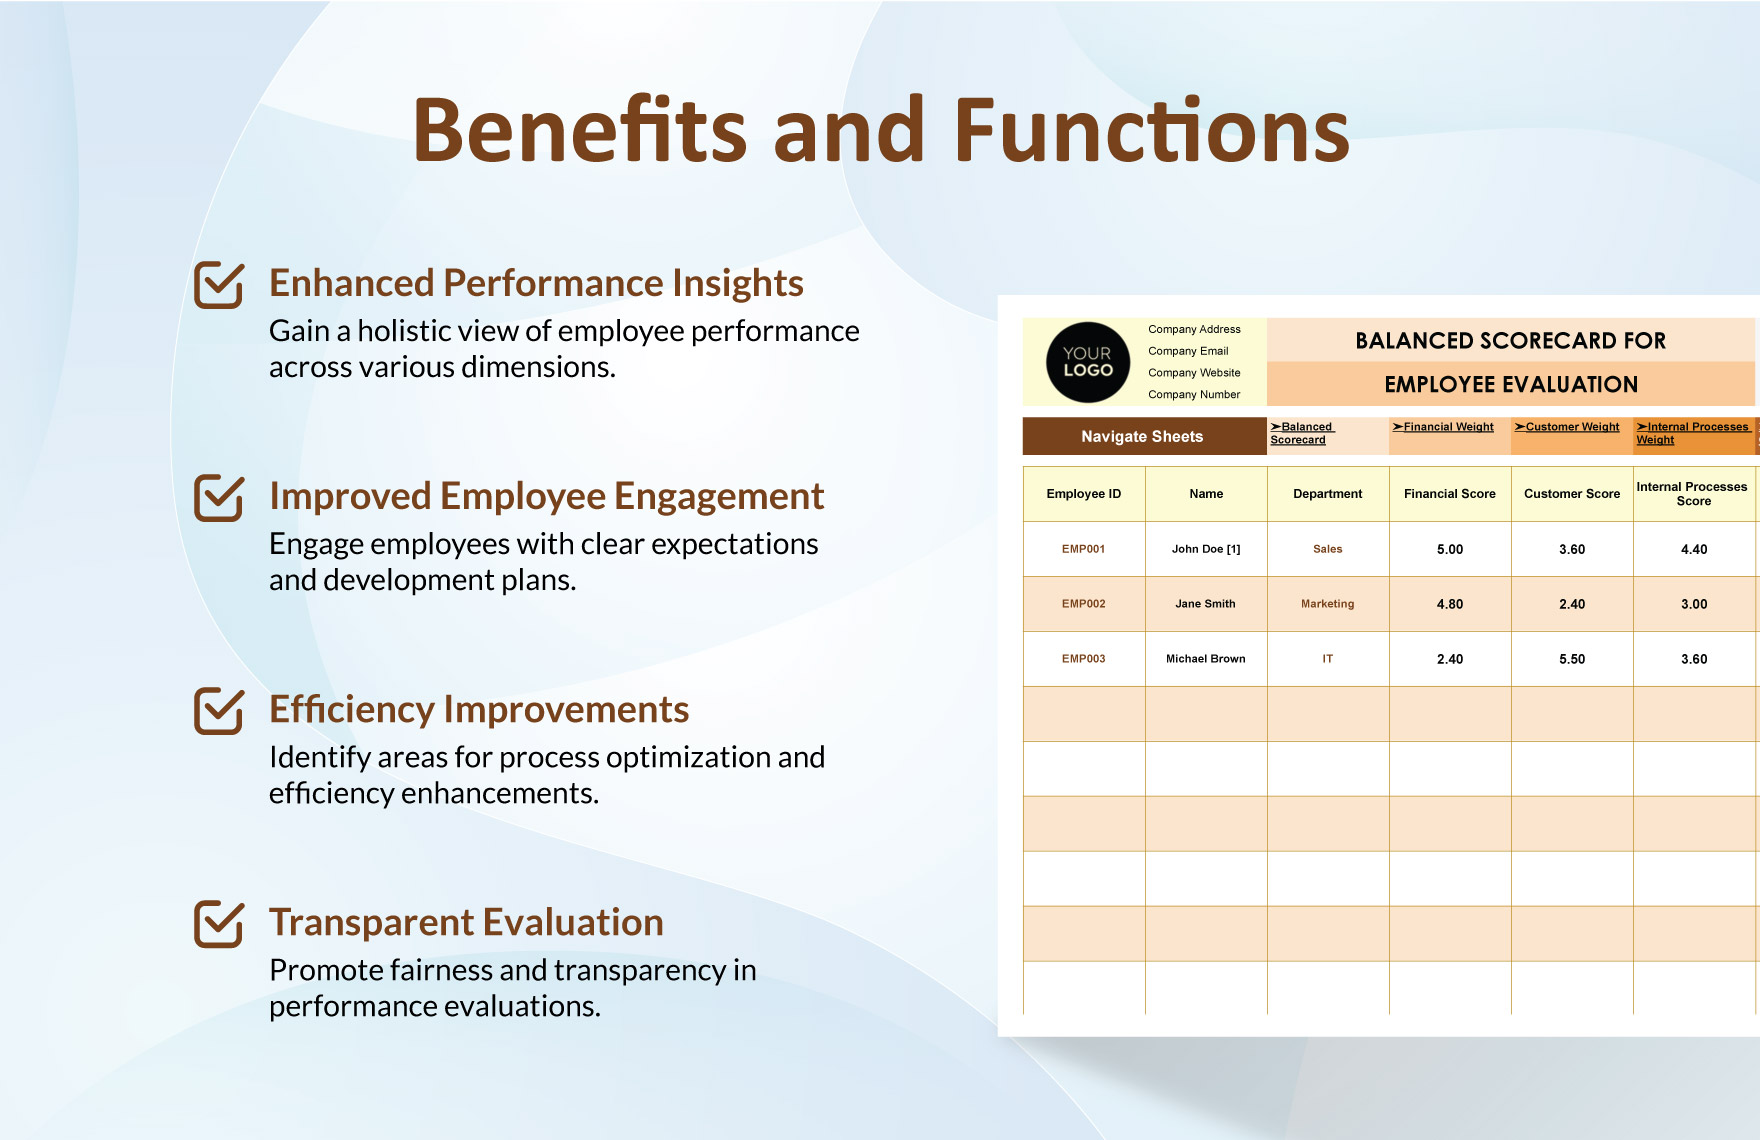 Balanced Scorecard for Employee Evaluation HR Template